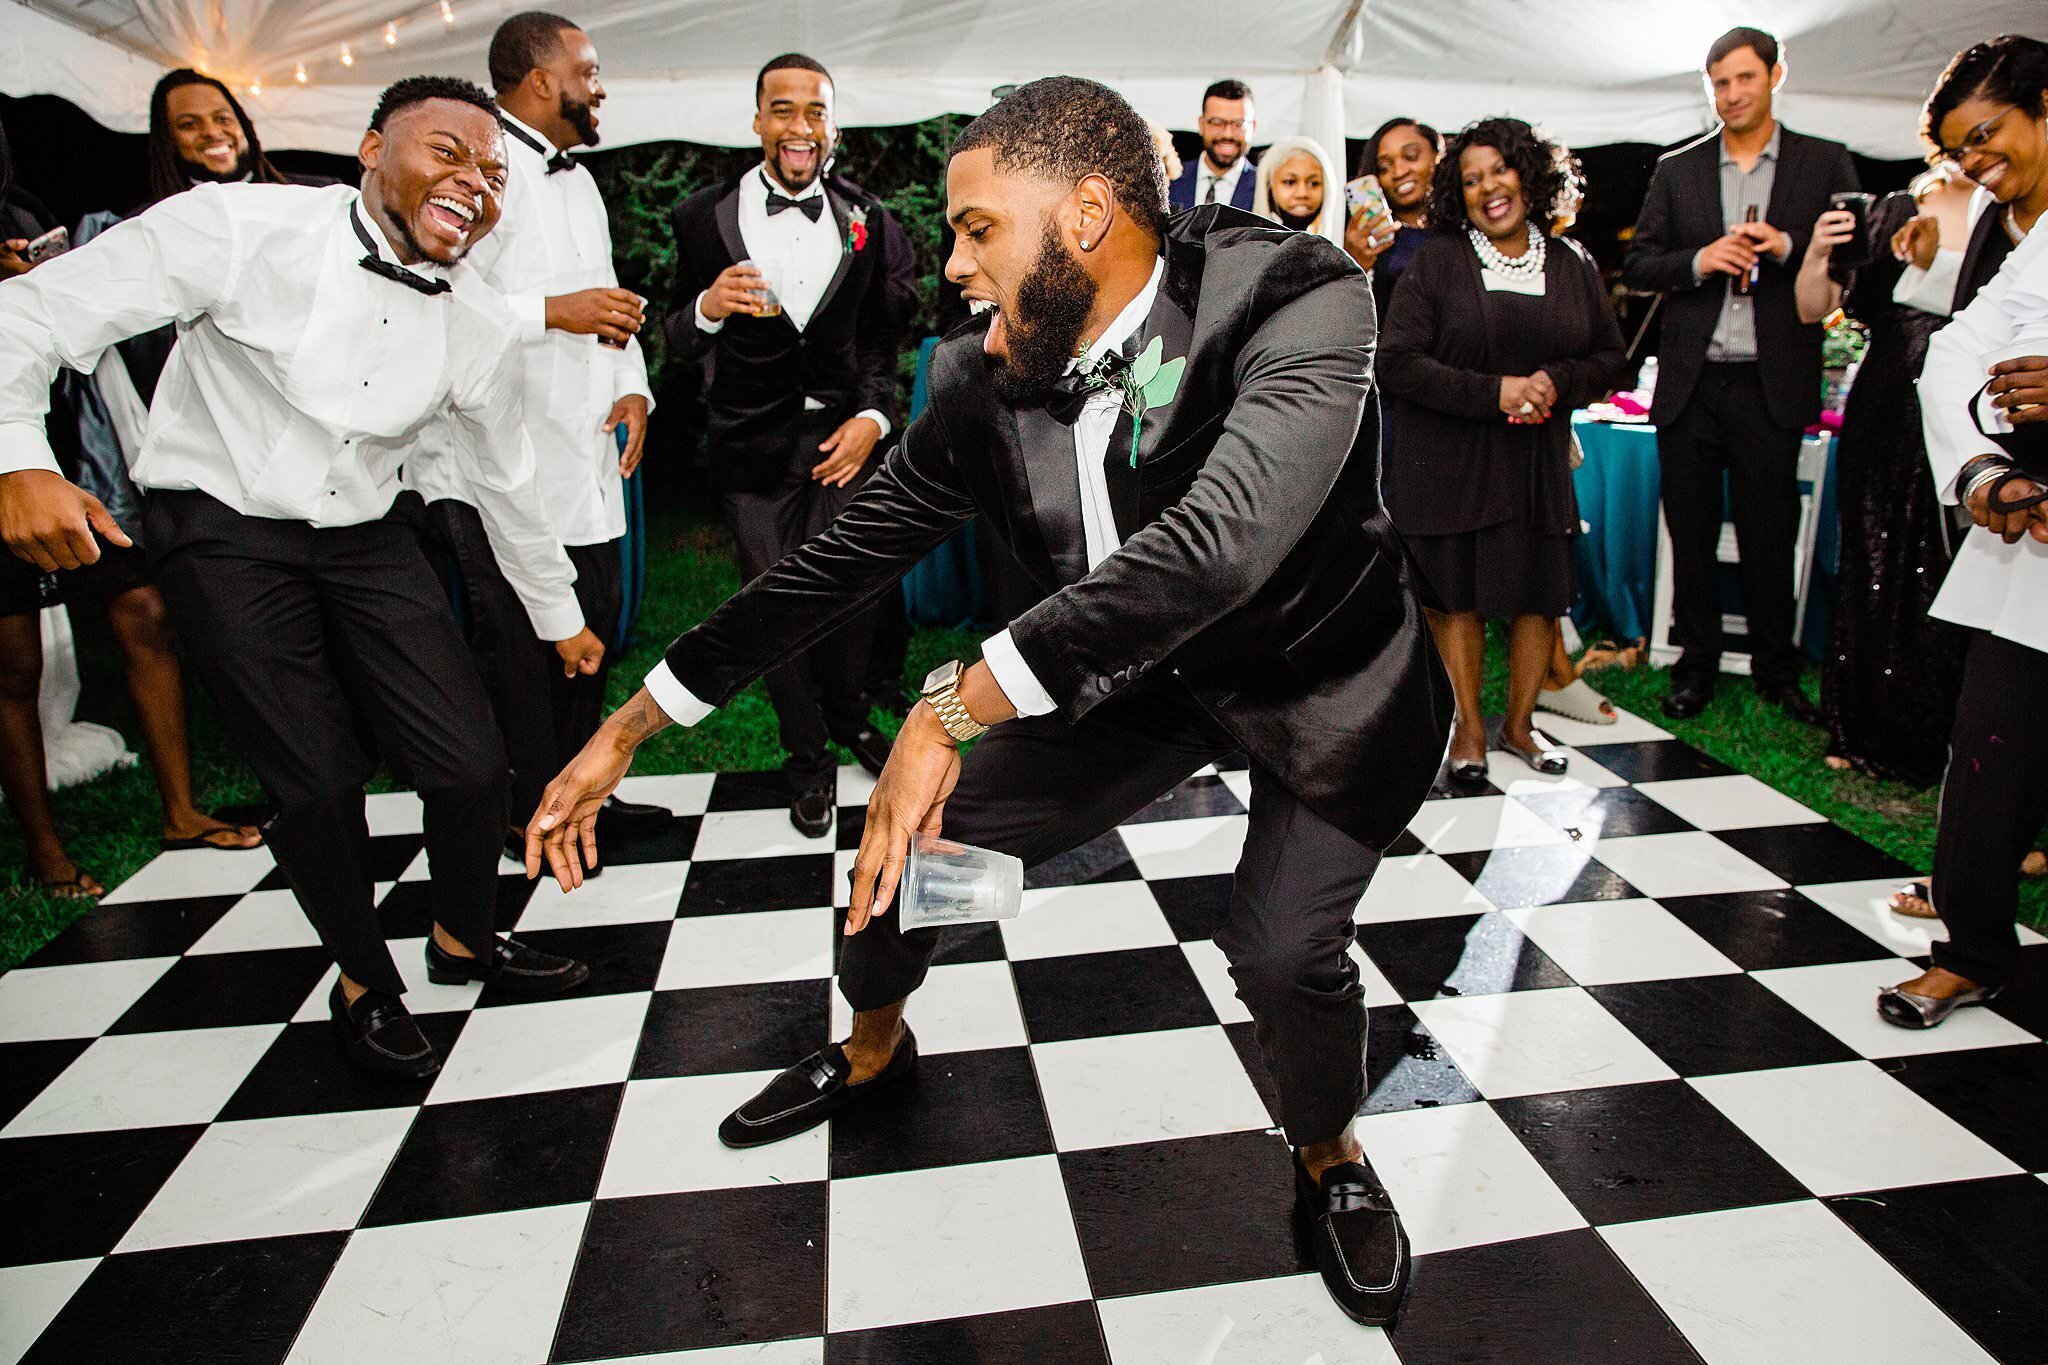 Wedding guests dancing on checkerboard dance floor at tented reception